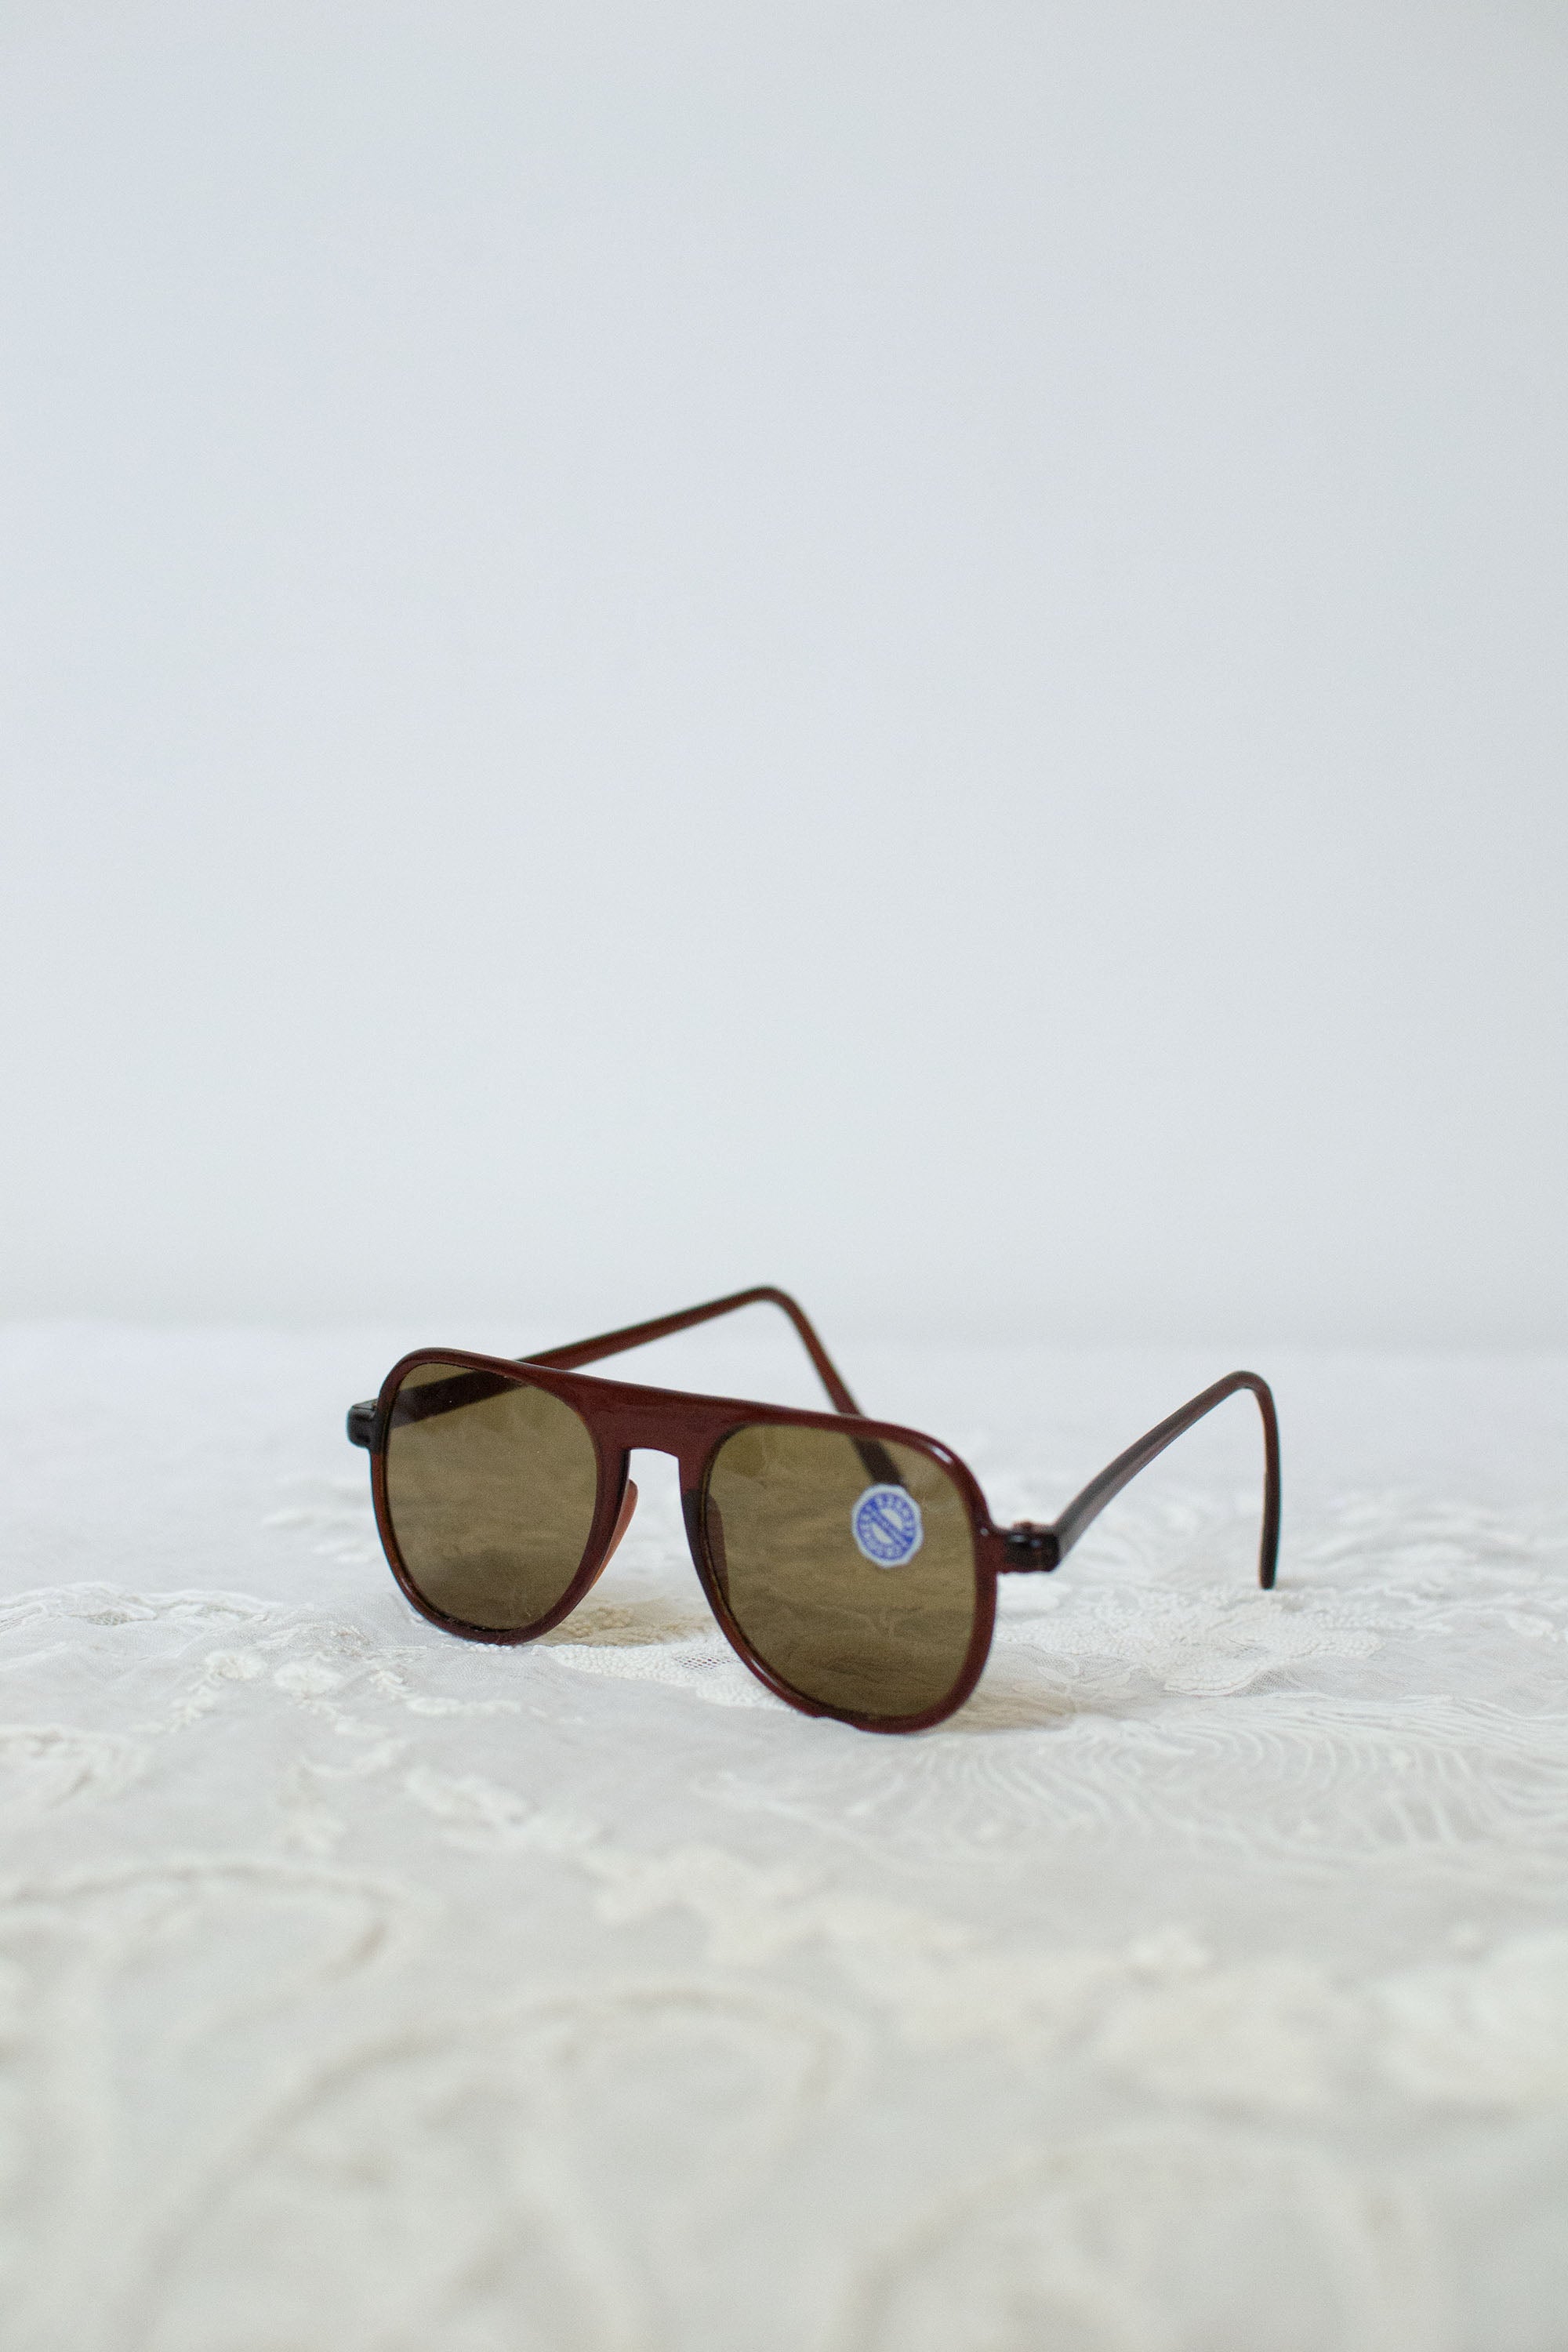 Tom Ford - Dimitry Sunglasses - Vintage Aviator Sunglasses - Shiny Black -  FT0334 - Sunglasses - Tom Ford Eyewear - Avvenice